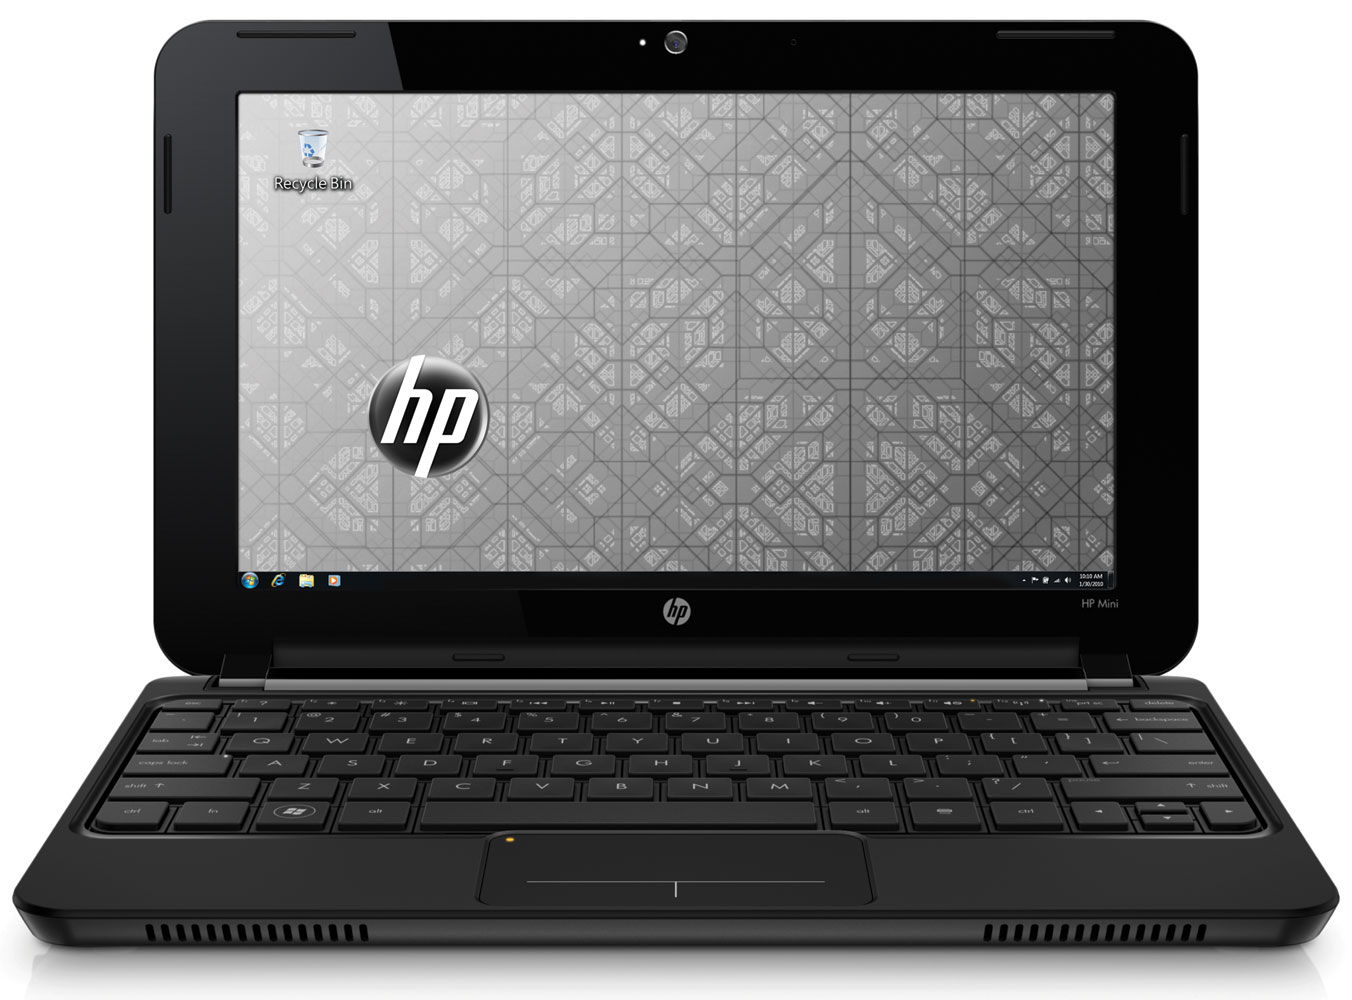 HP Mini 110 Series -  External Reviews